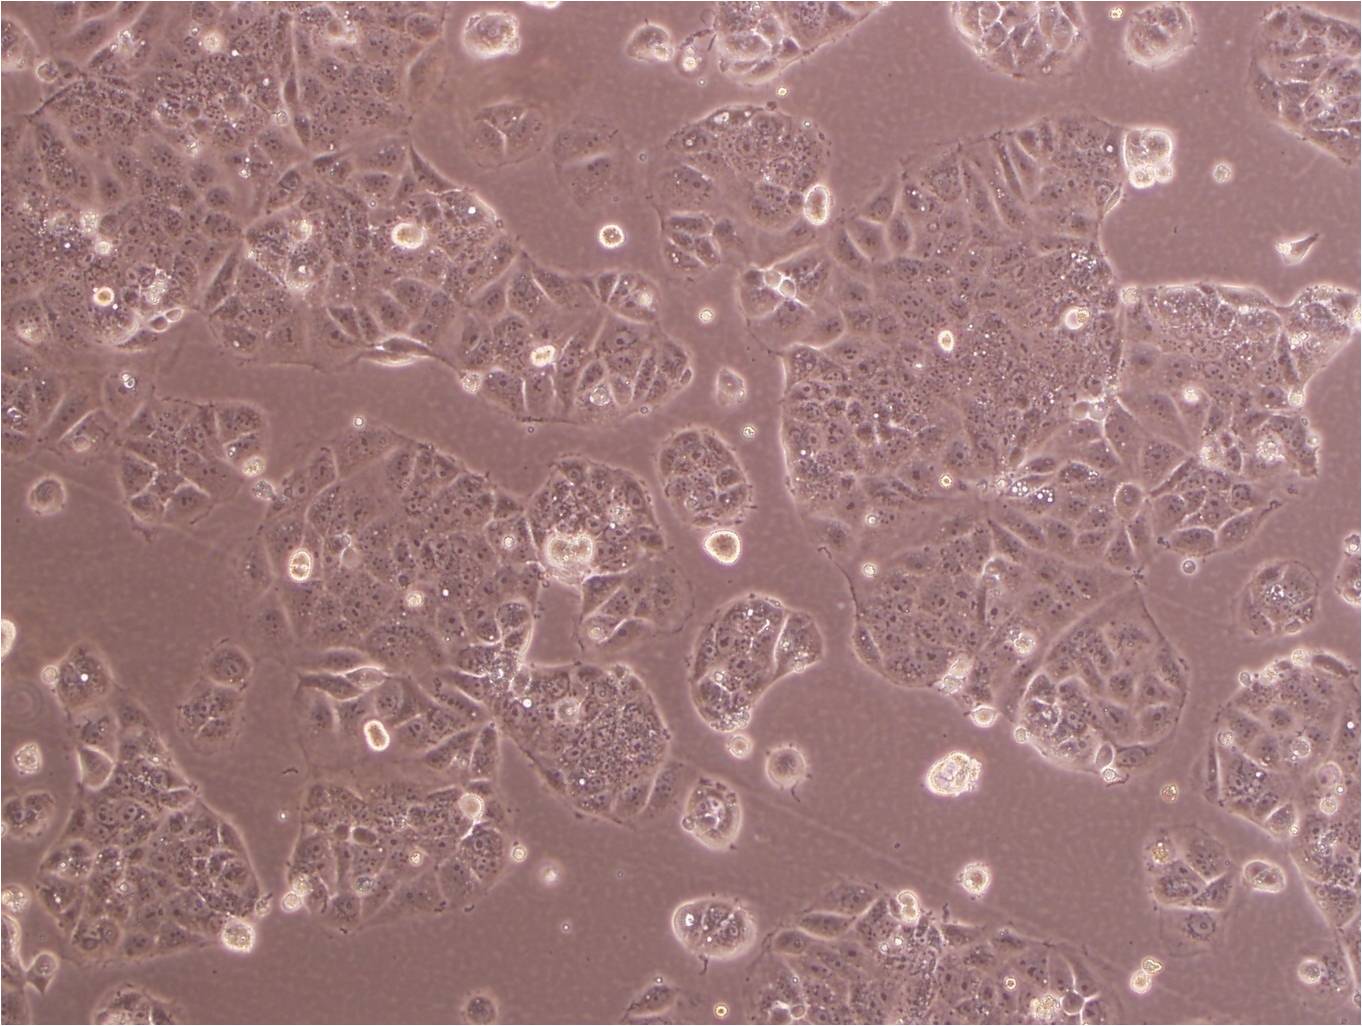 C166 epithelioid cells小鼠血管内皮细胞系